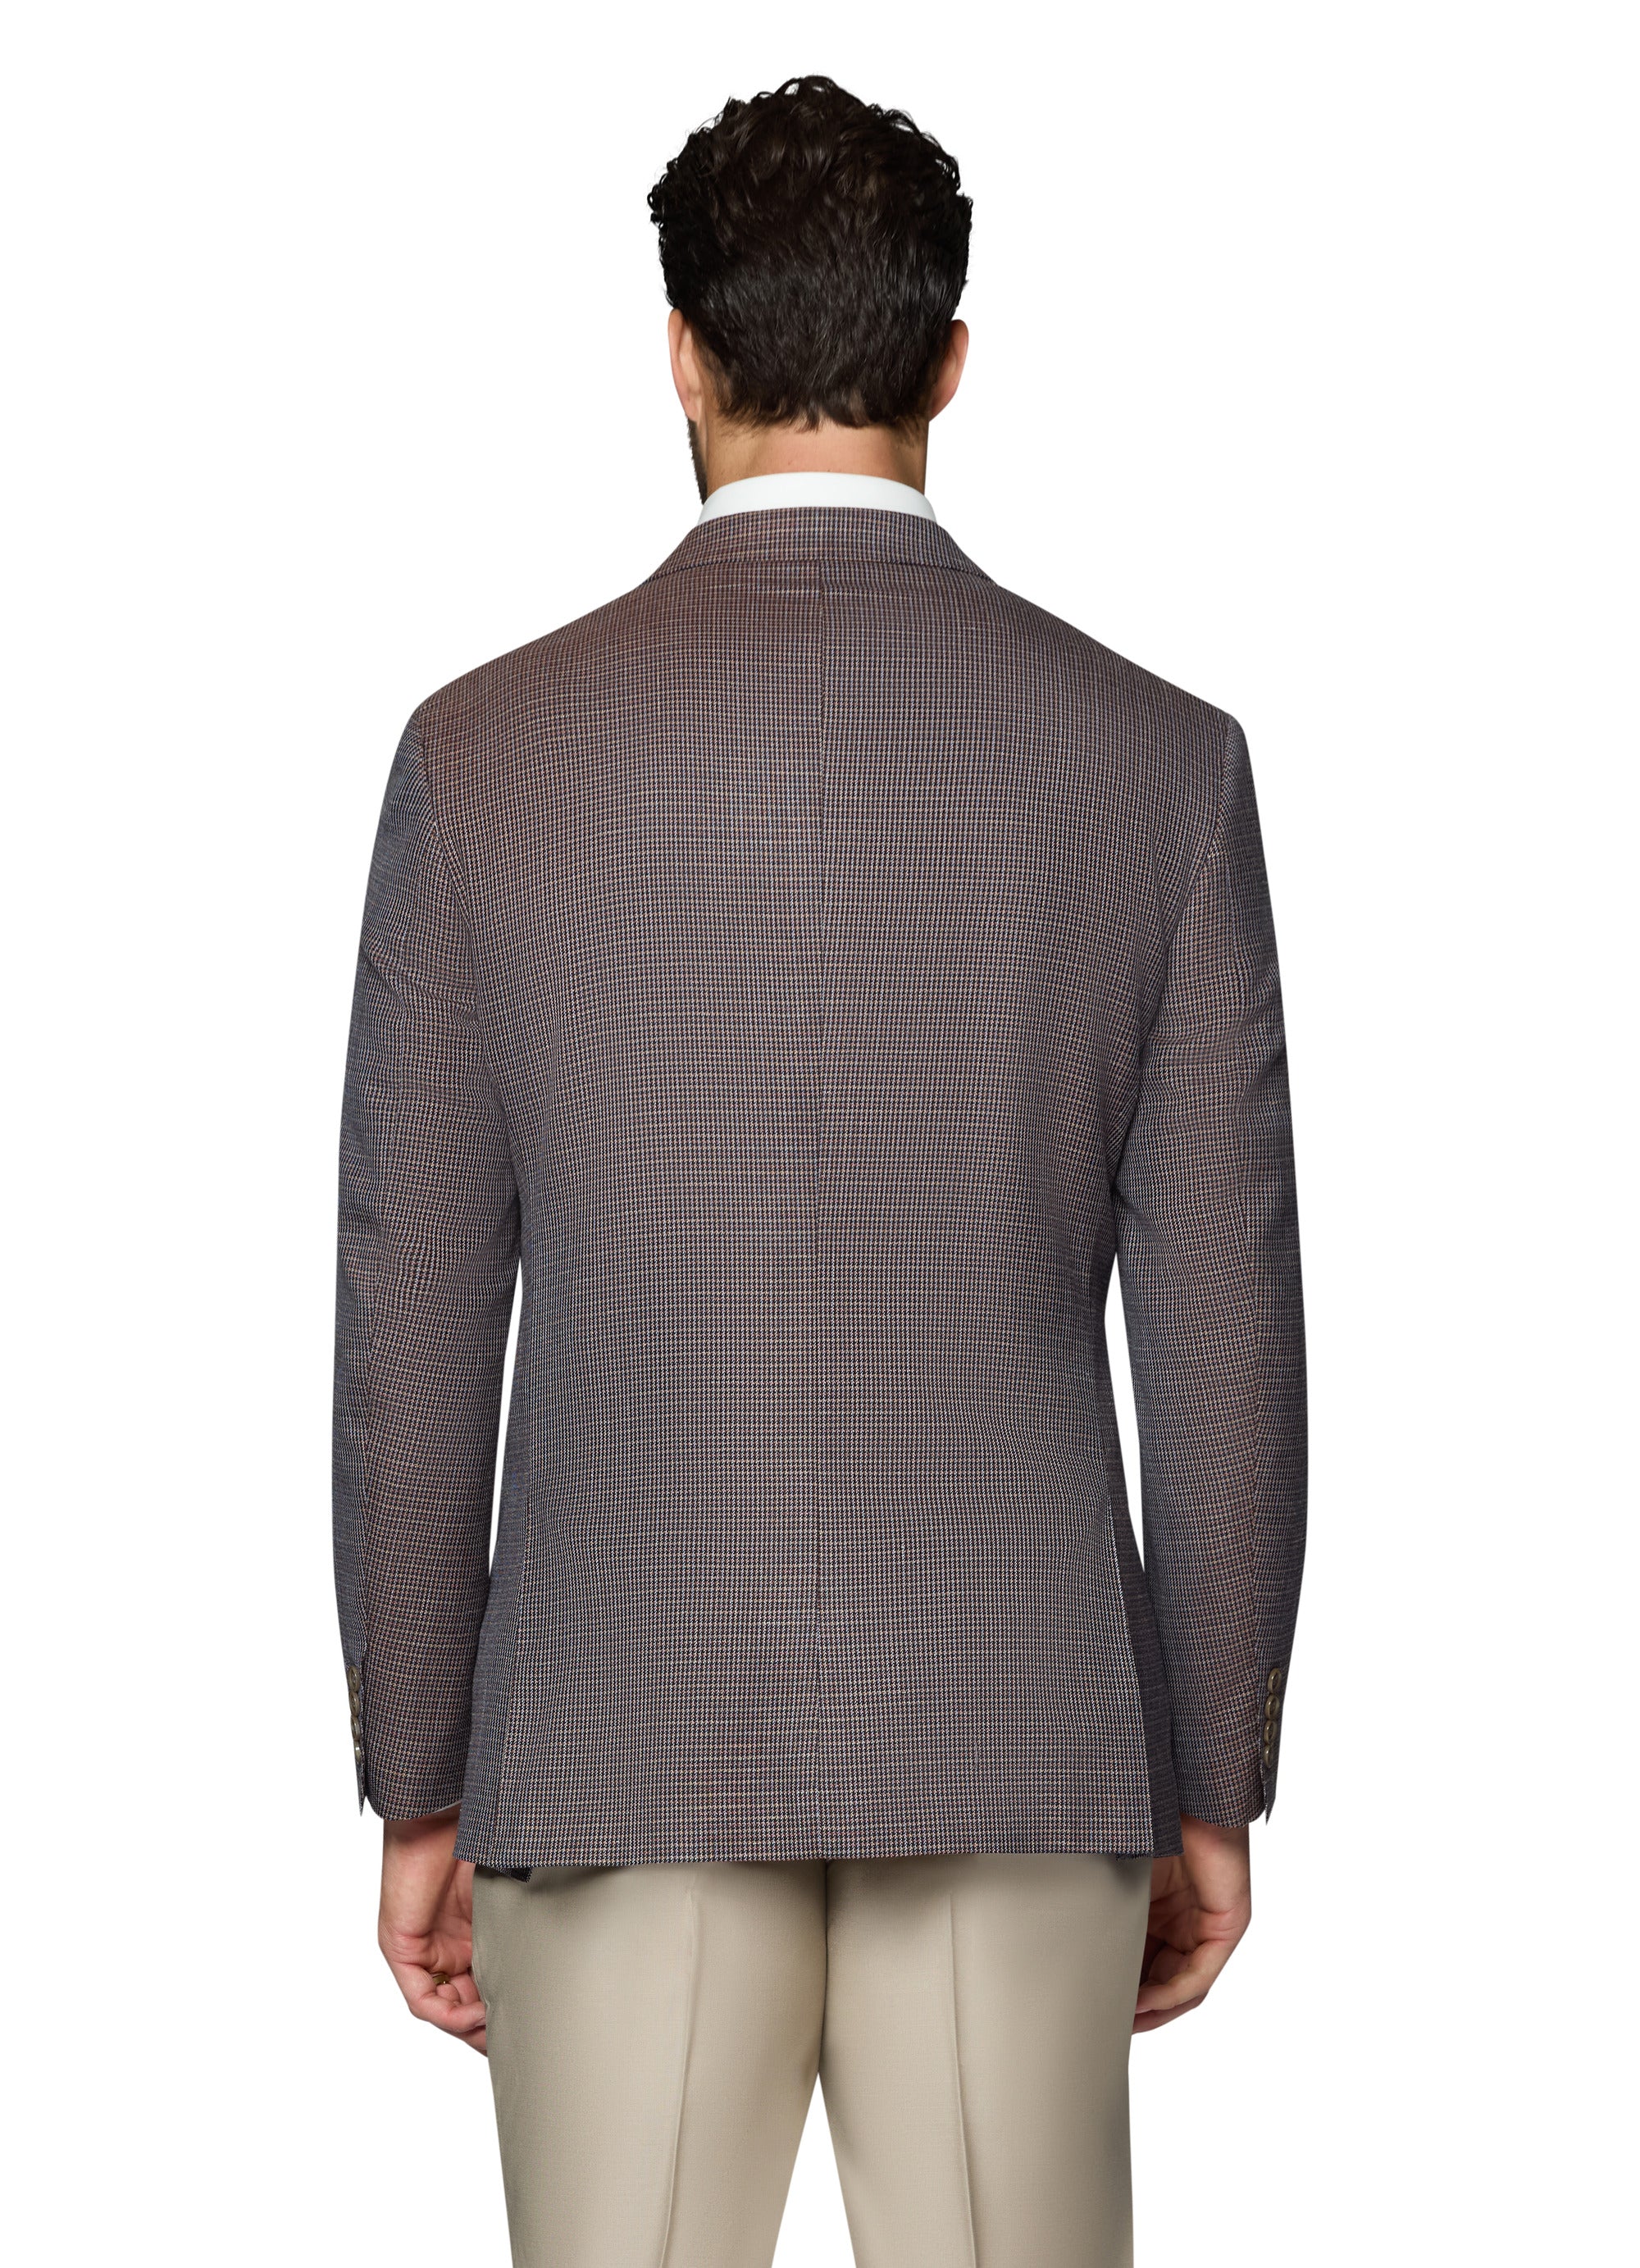 Berragamo Wool Sport Coat Modern Fit - Brown Check